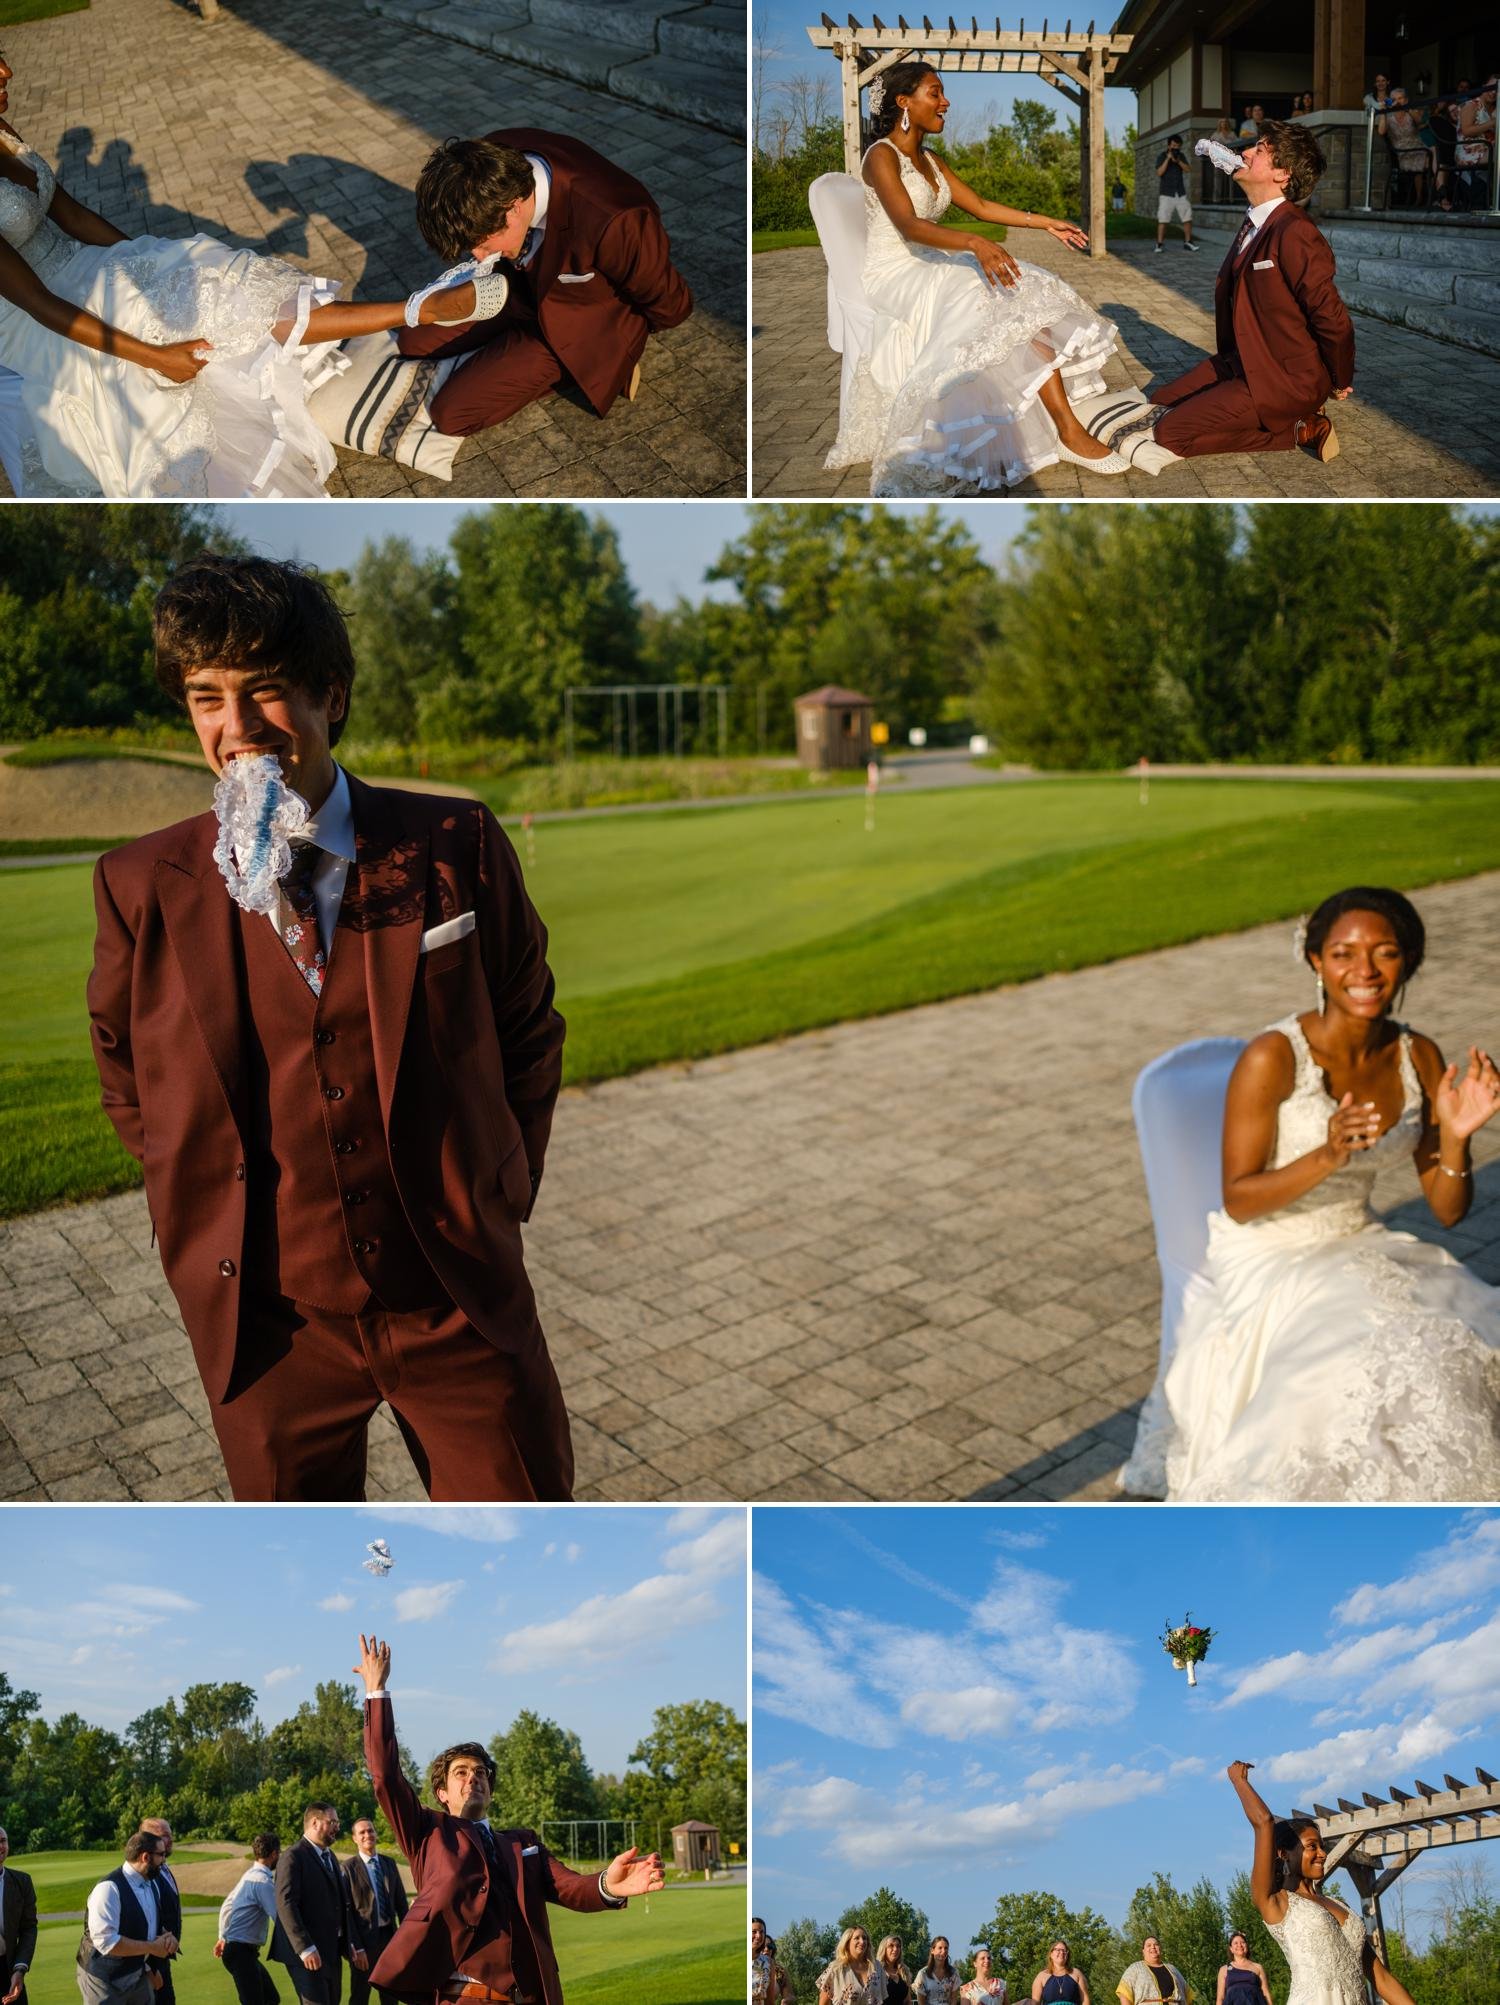 photos of the garter and bouquet toss at a wedding reception